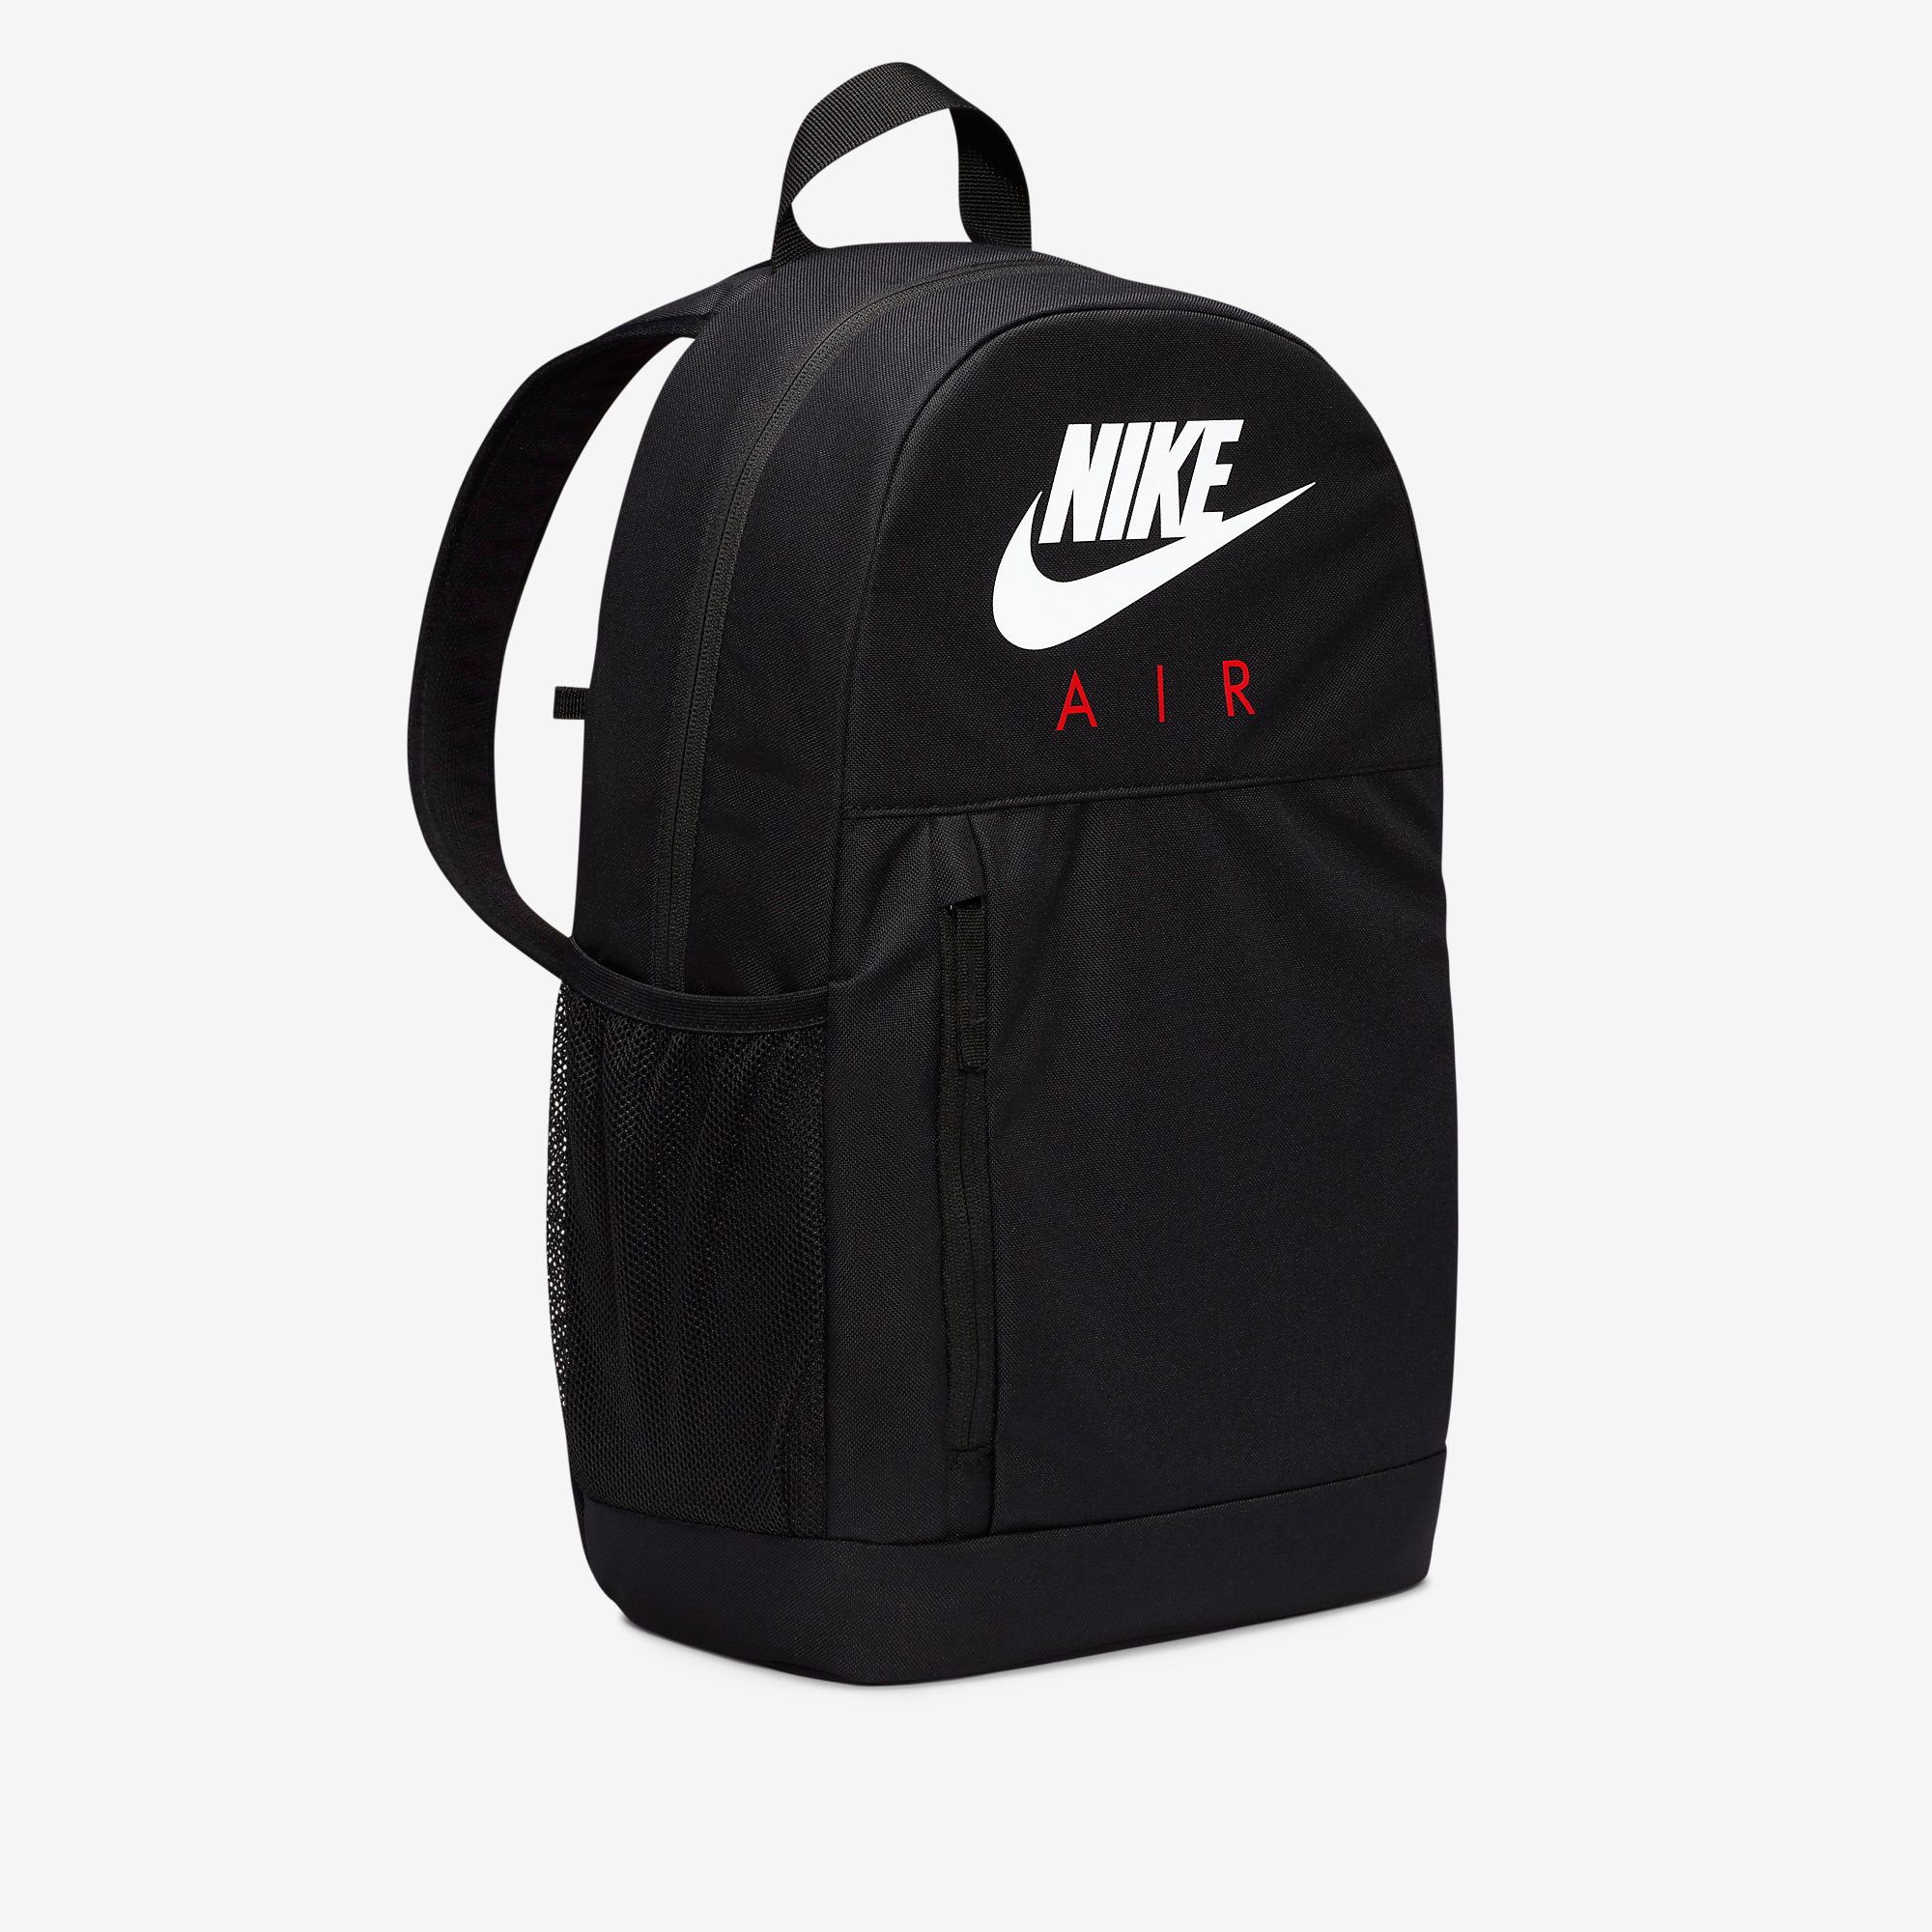  Nike Elemental Backpack - Black / University Red 